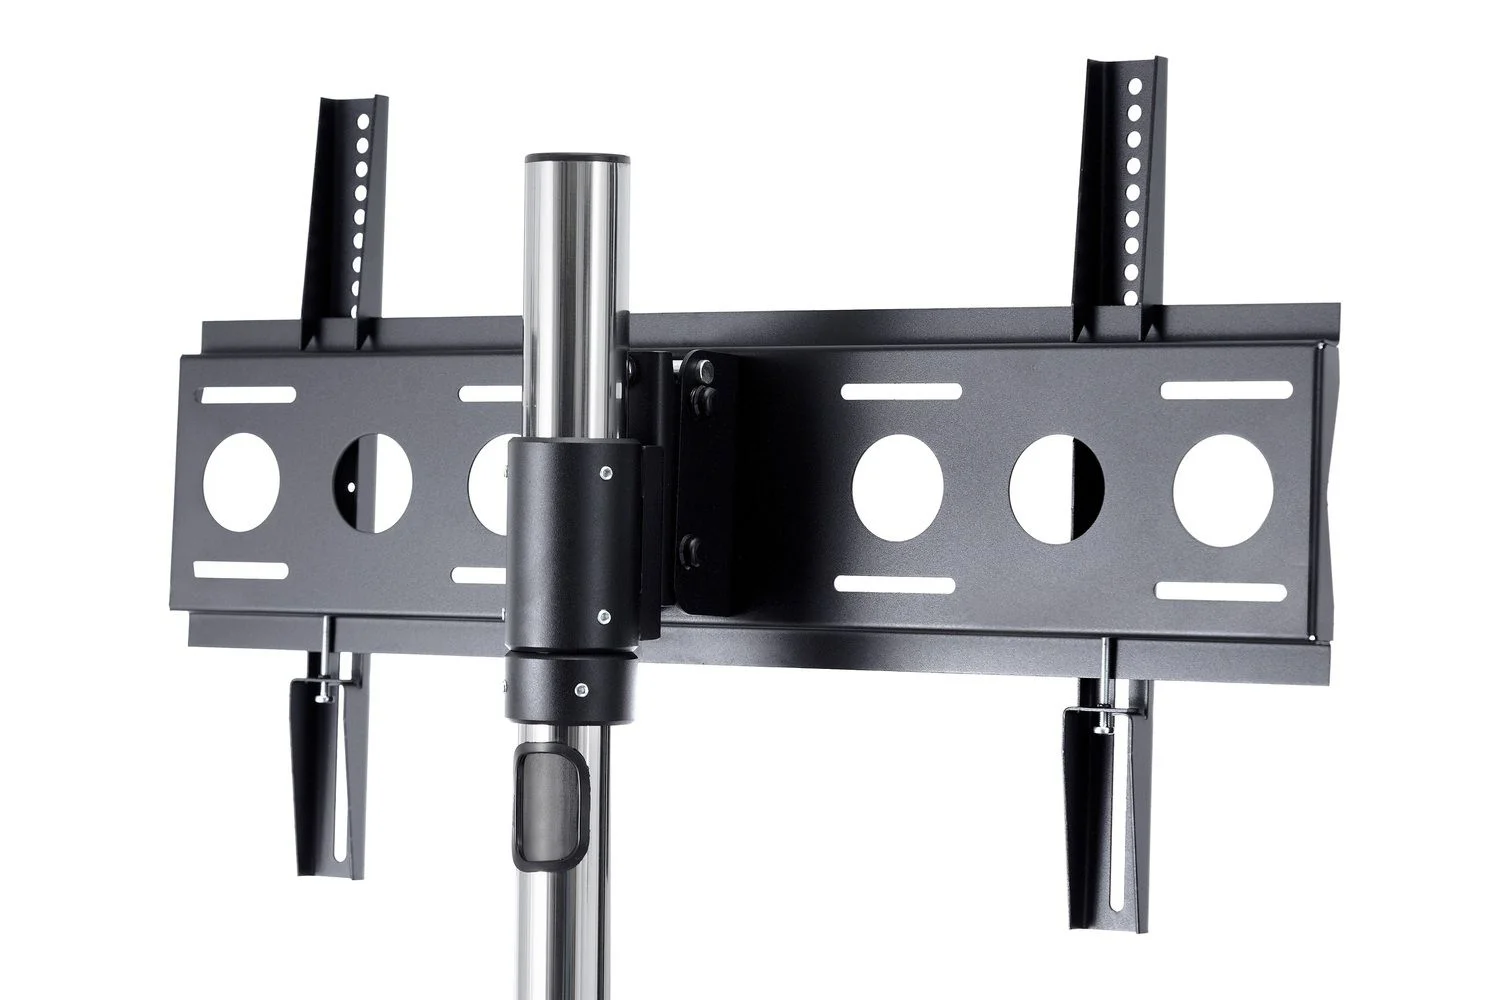 edbak EB-STD01C-B - height-adjustable stand for displays 40 - 75 inch - VESA 600x400 mm - up to 80 kg - landscape - silver / black